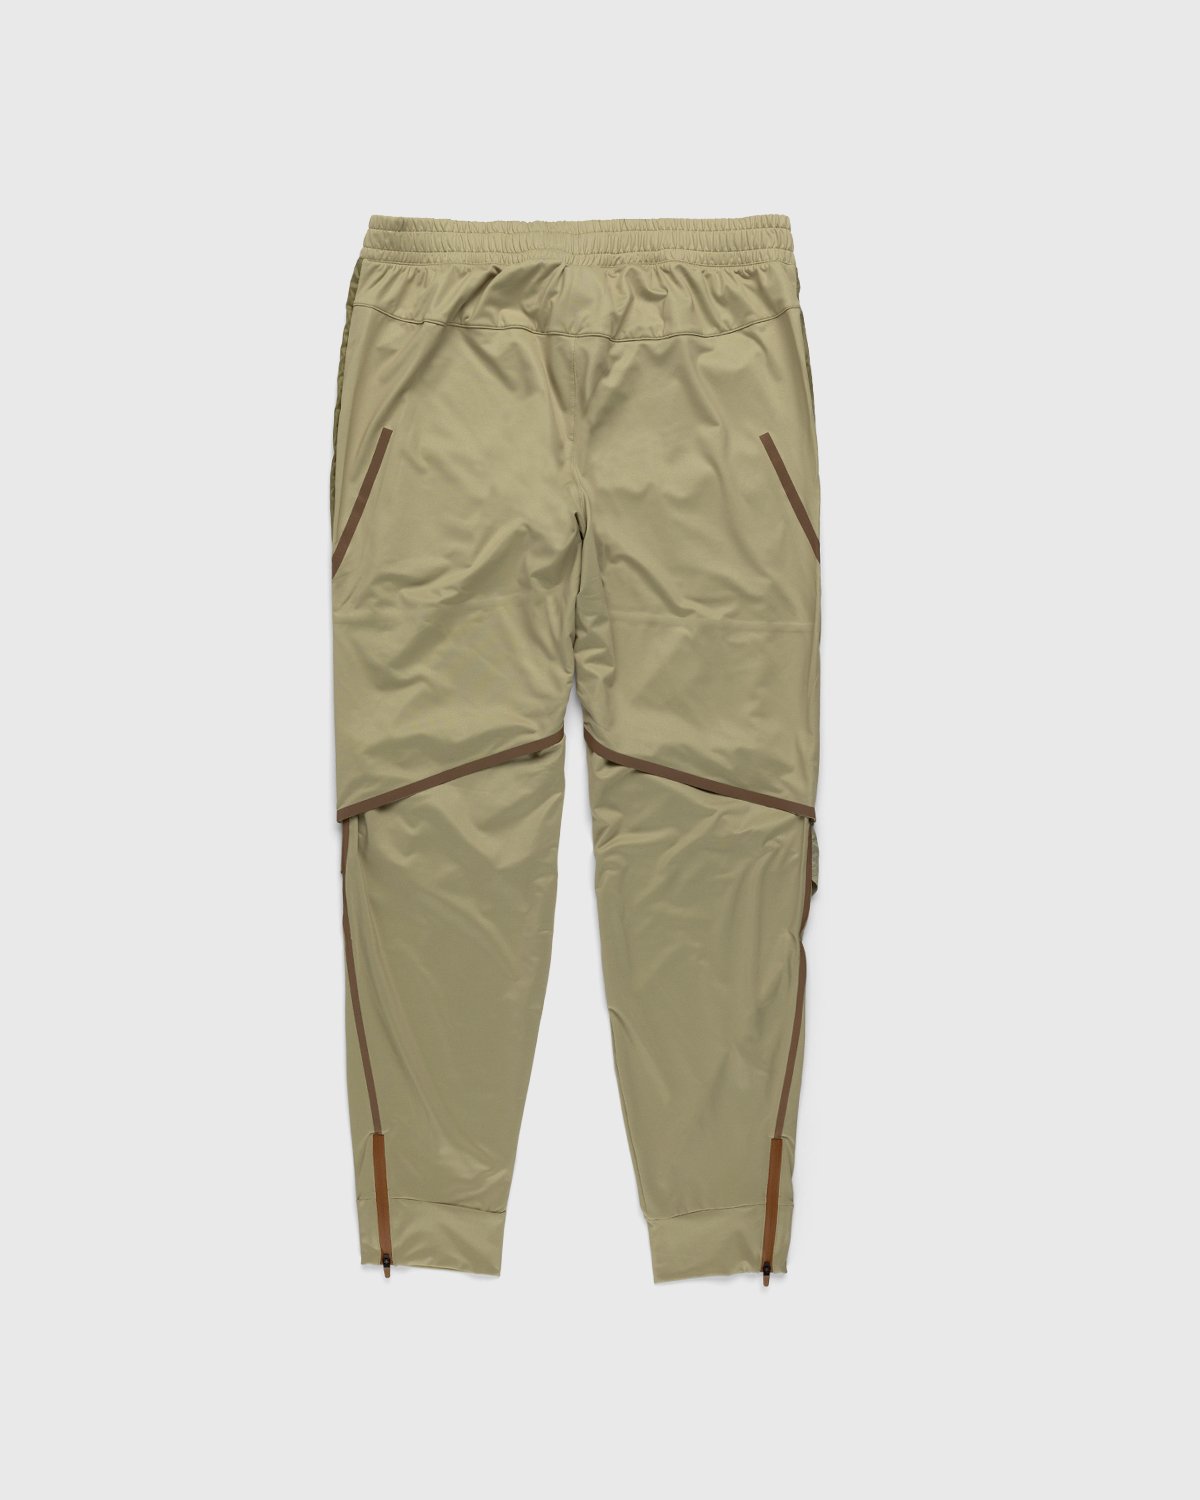 Loewe x On - Men's Technical Running Pants Gradient Khaki - Clothing - Green - Image 2